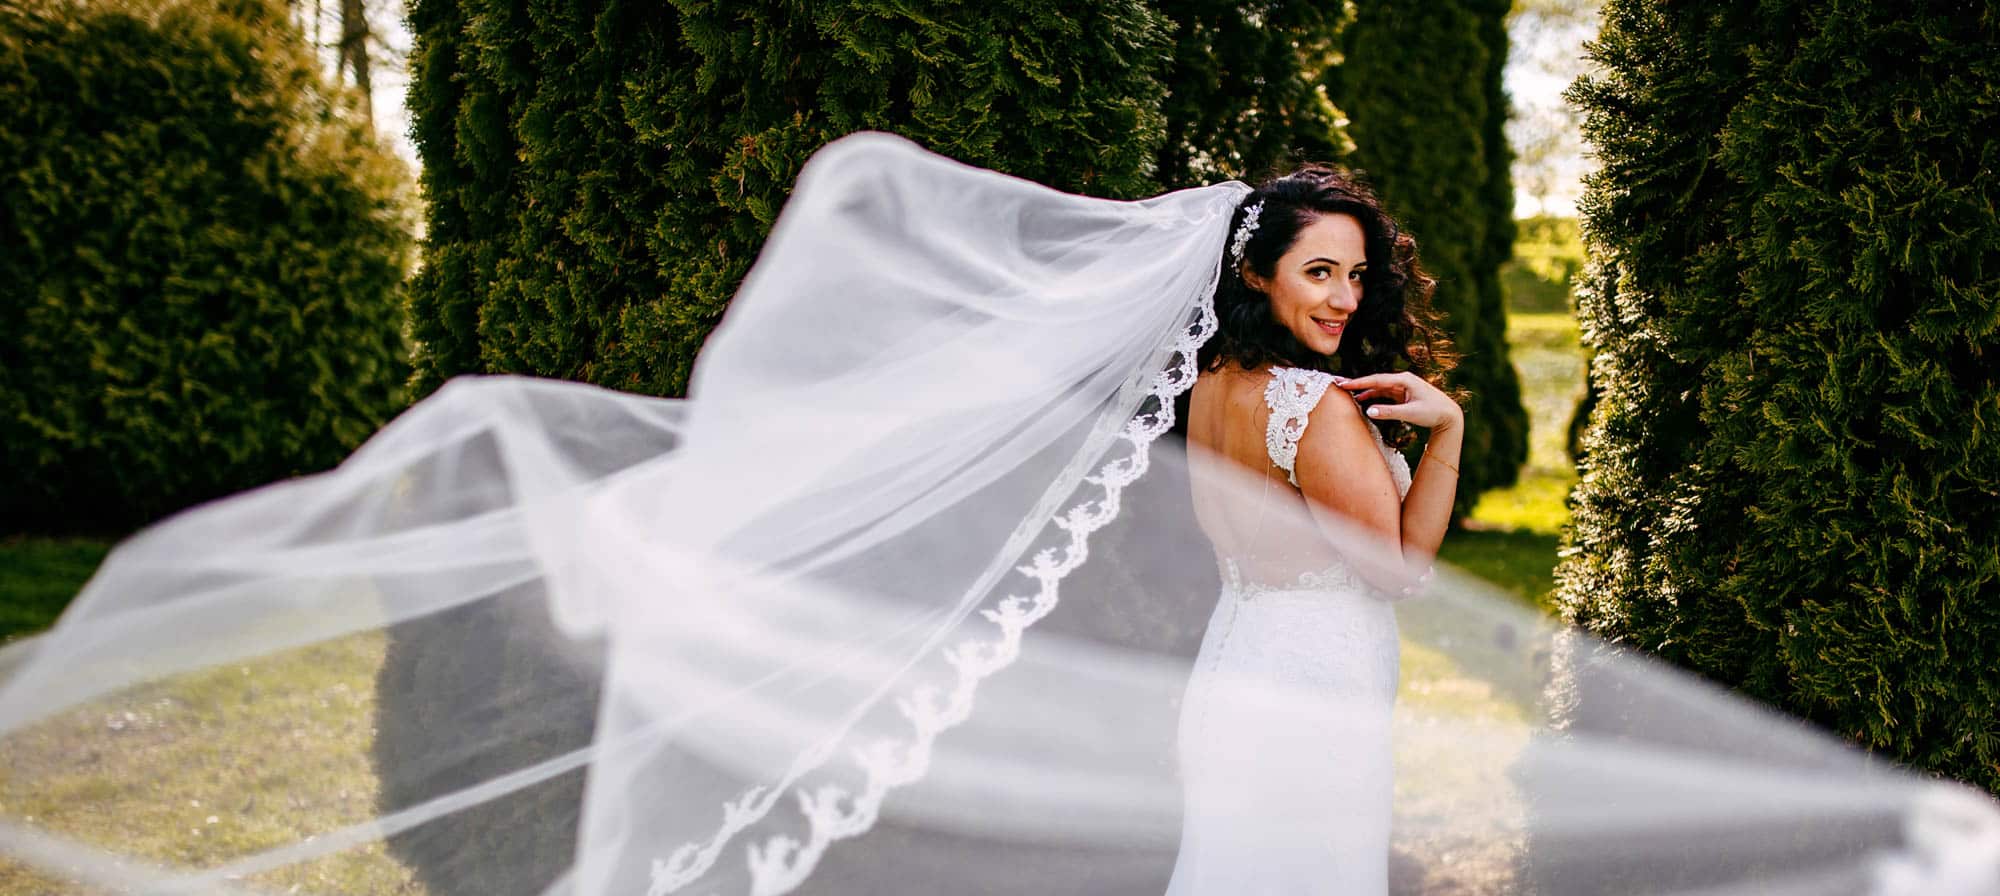 wedding dress veil | How much does a wedding dress cost?